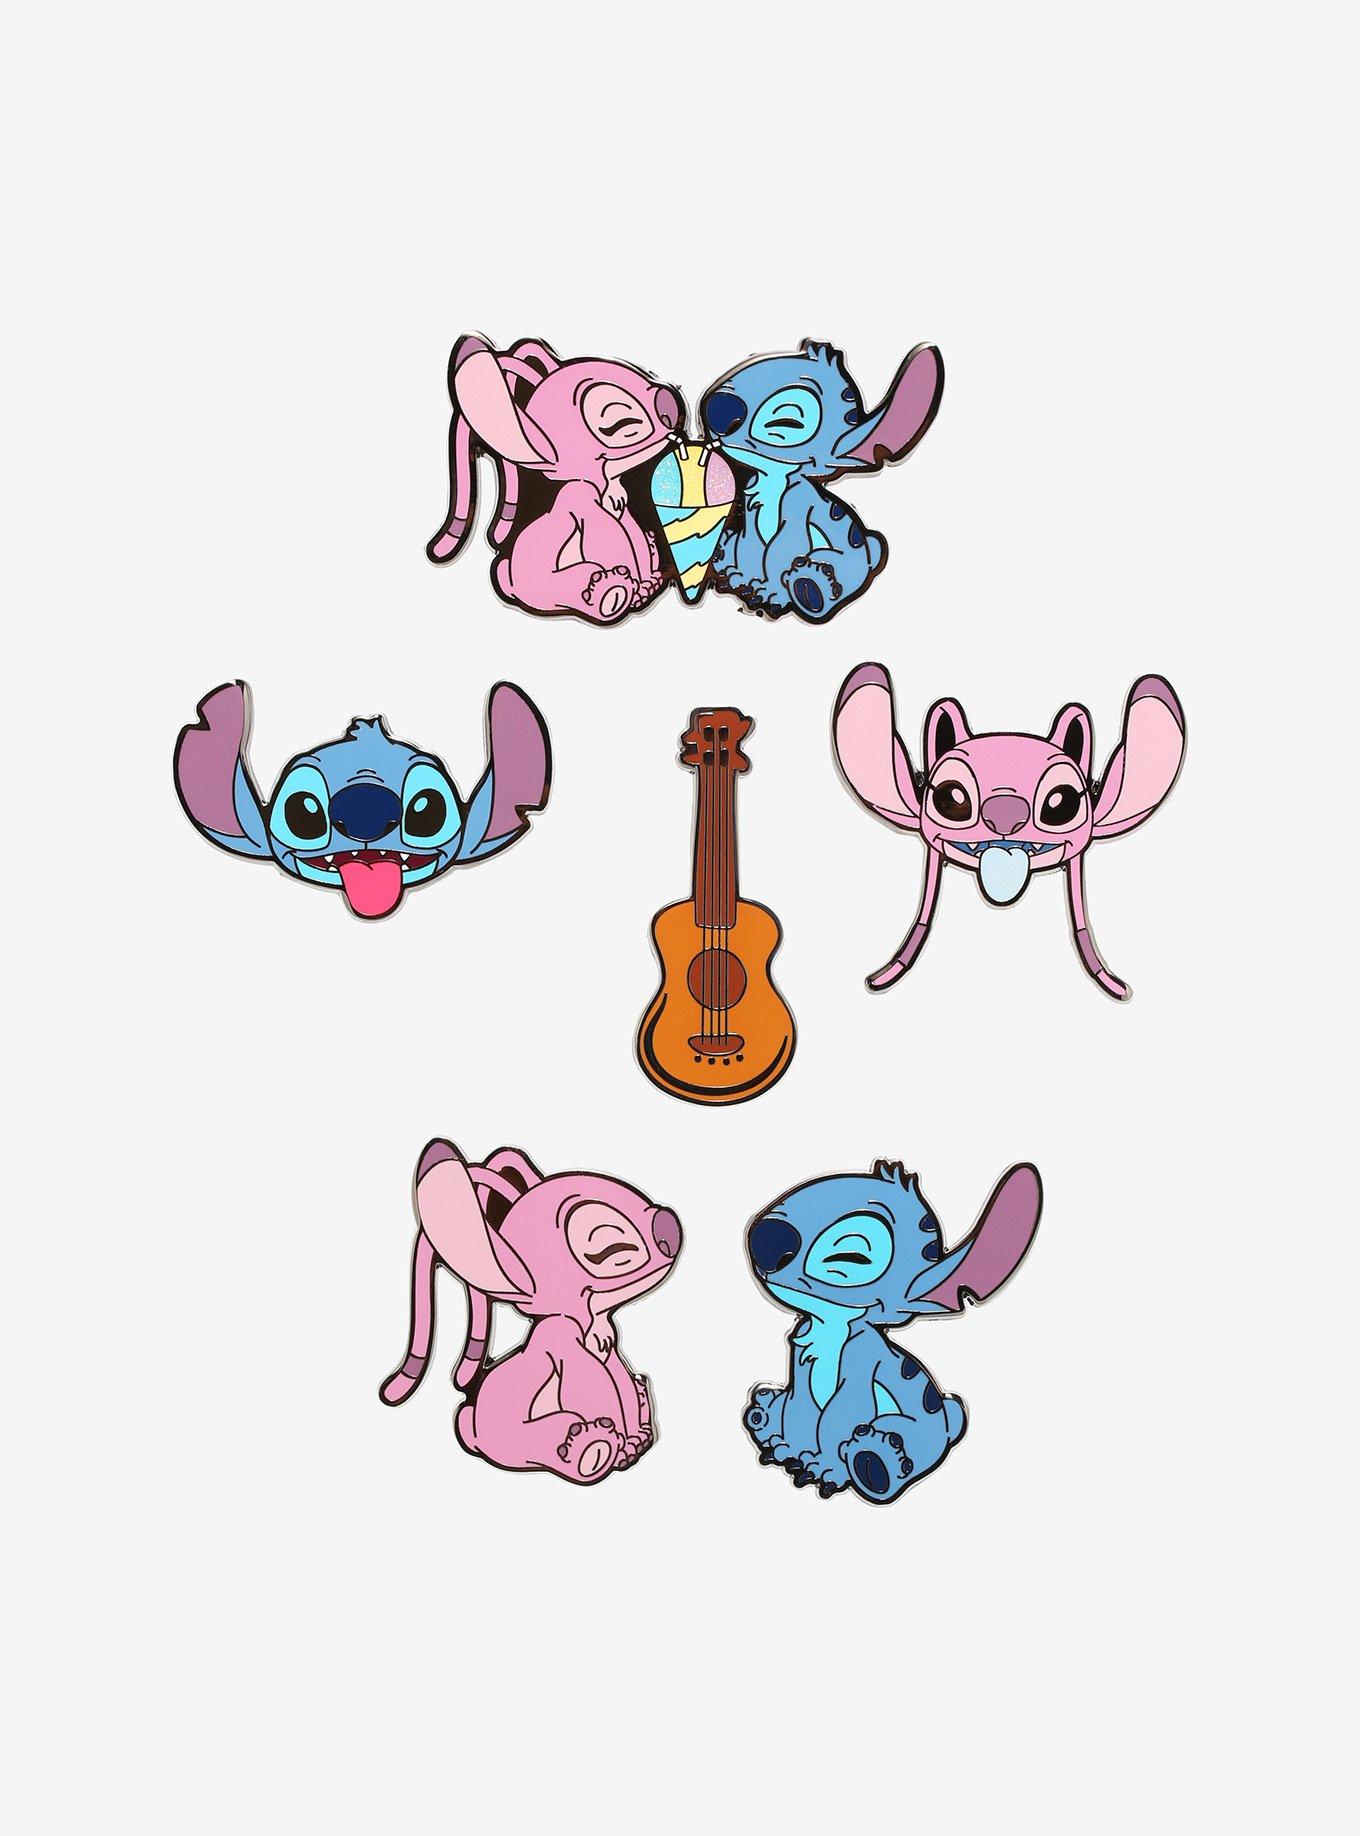 Lilo & Stitch Scrump Fun Blind Box Pins at Hot Topic - Disney Pins Blog